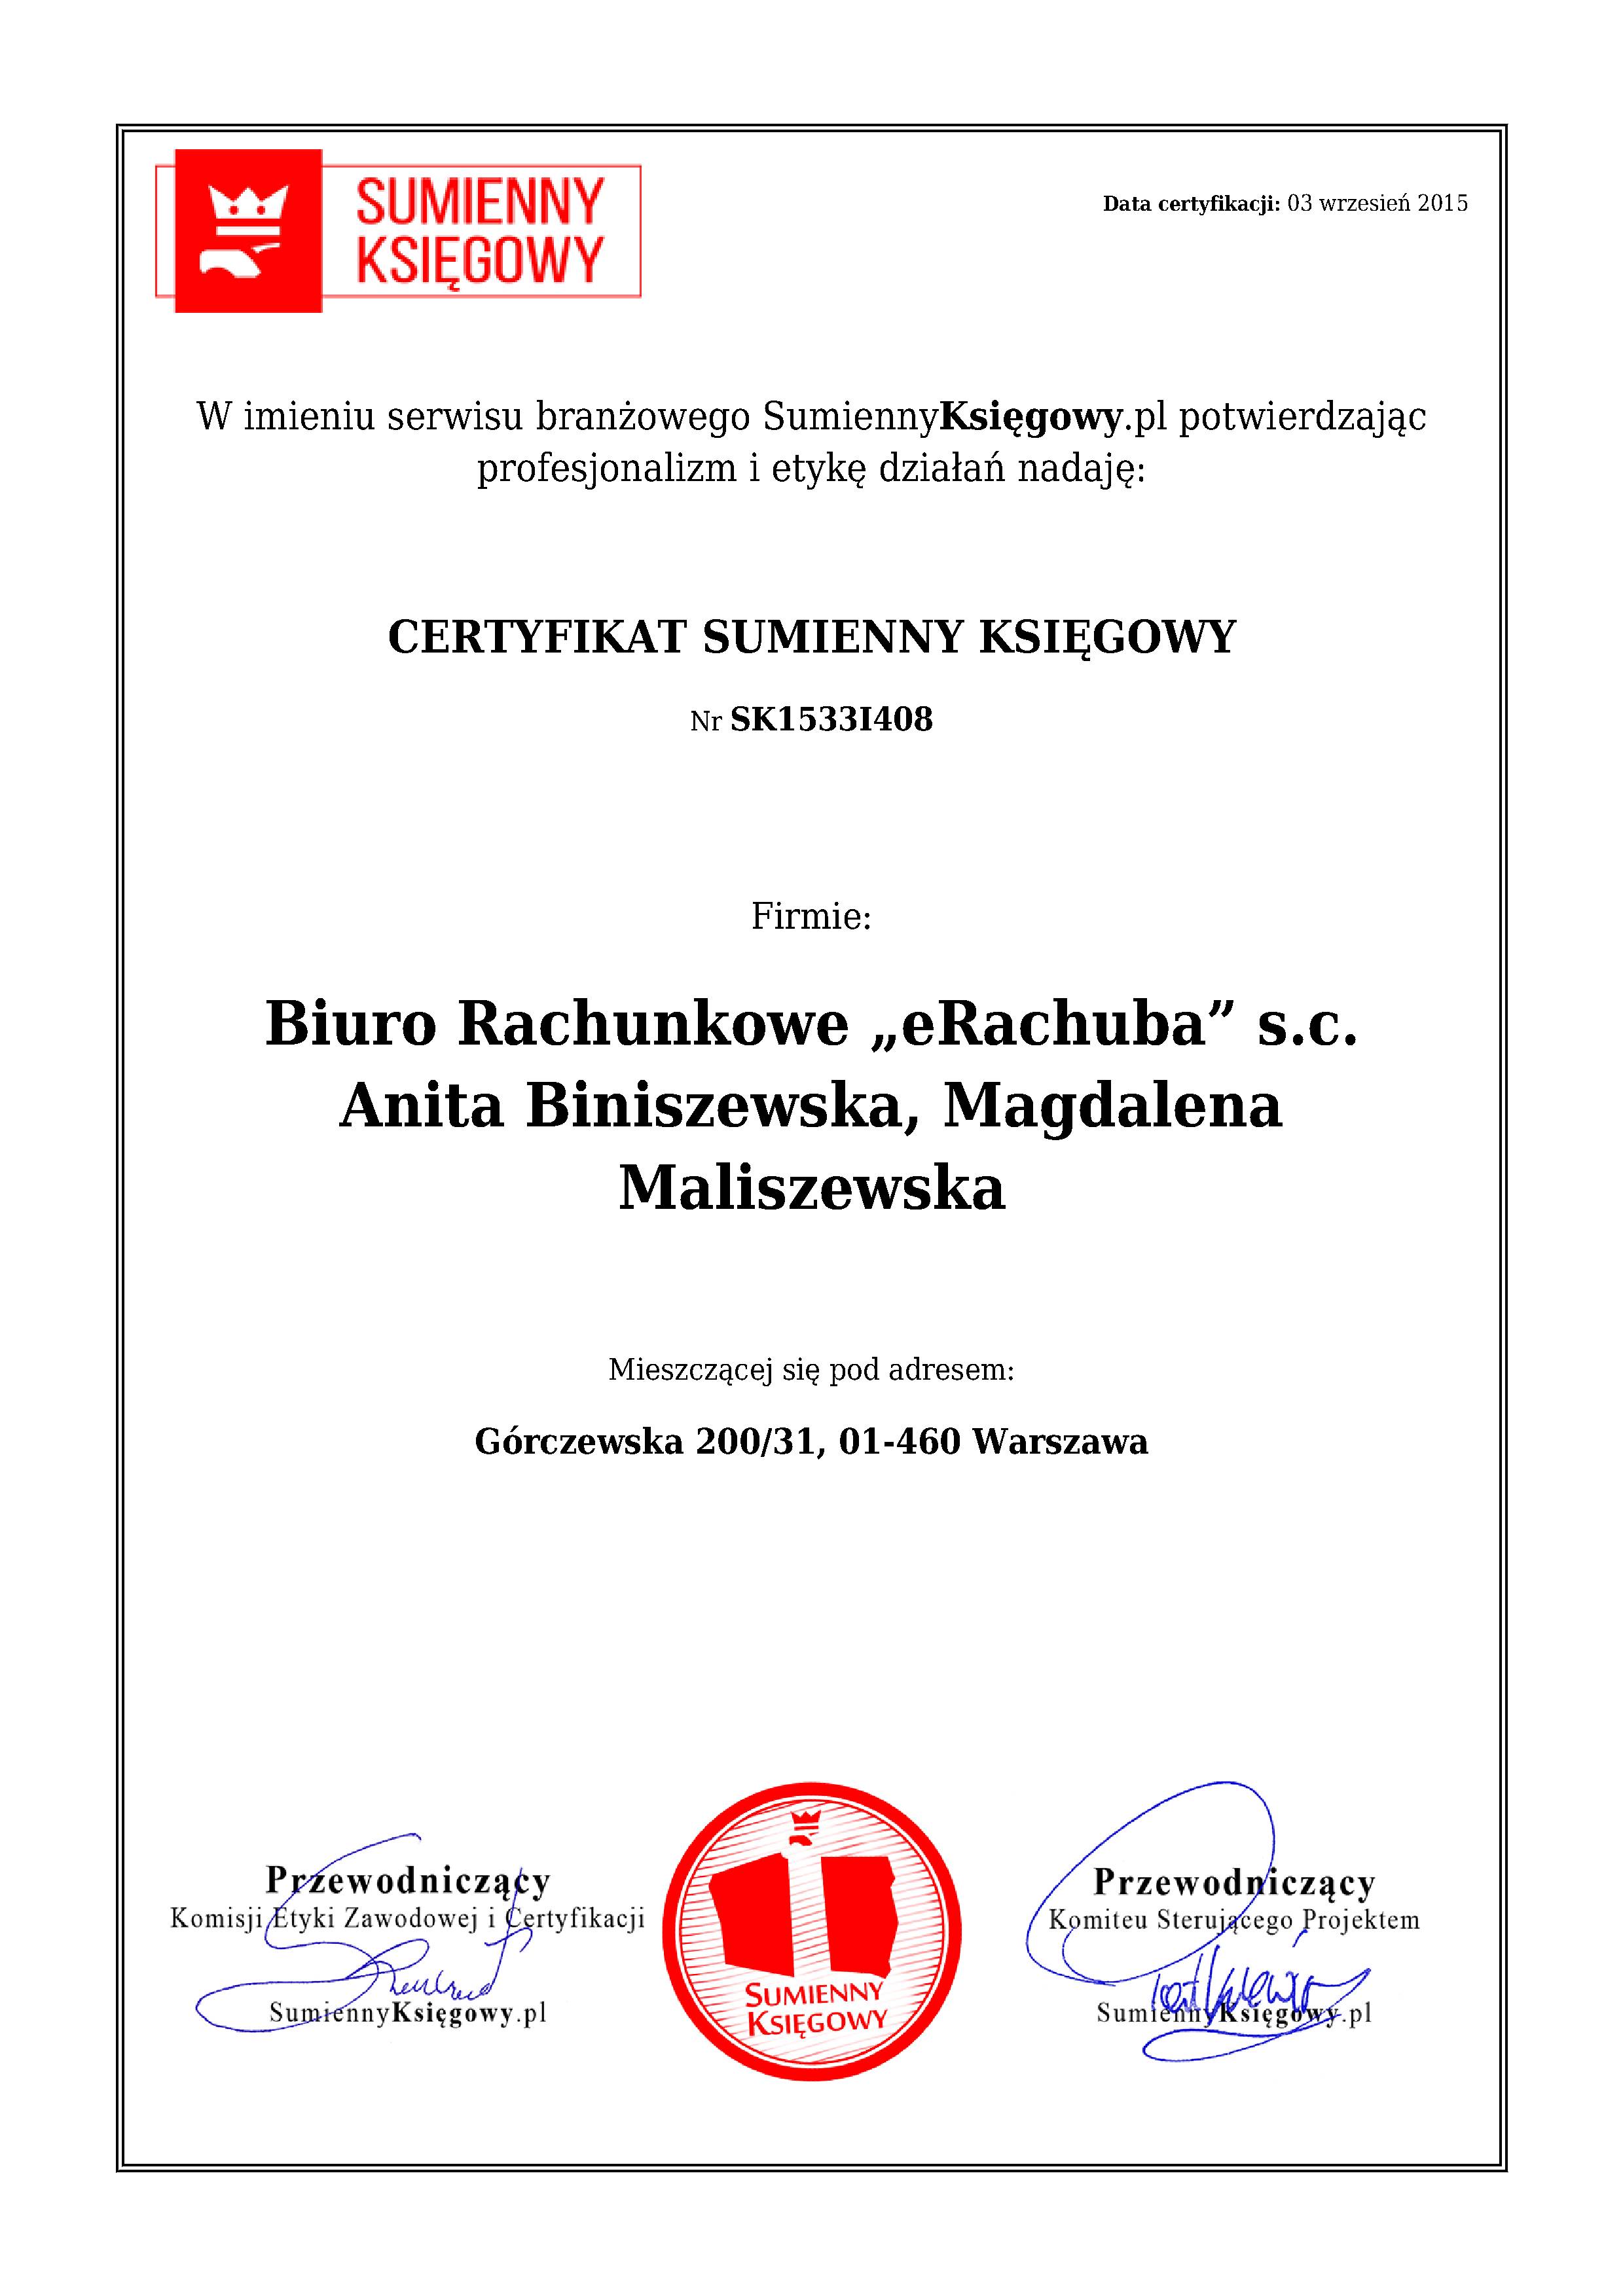 Biuro Rachunkowe „eRachuba” s.c. Anita Biniszewska, Magdalena Maliszewska certyfikat 1